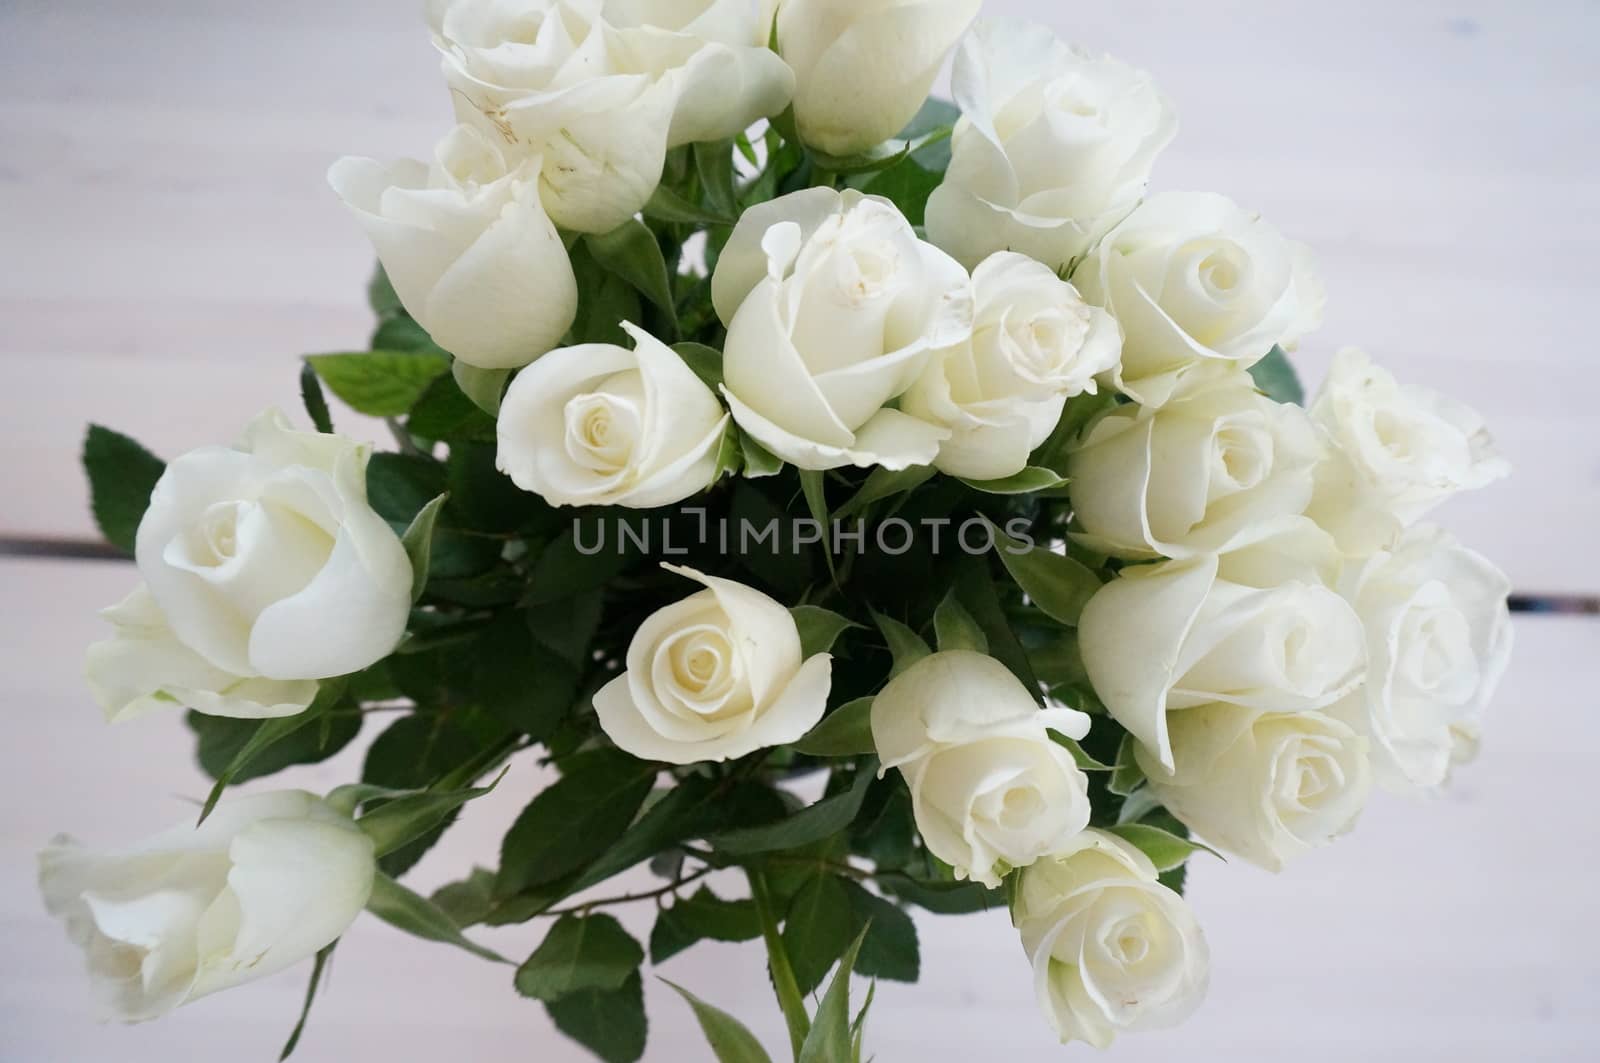 White roses by mariellehoystad@hotmail.com